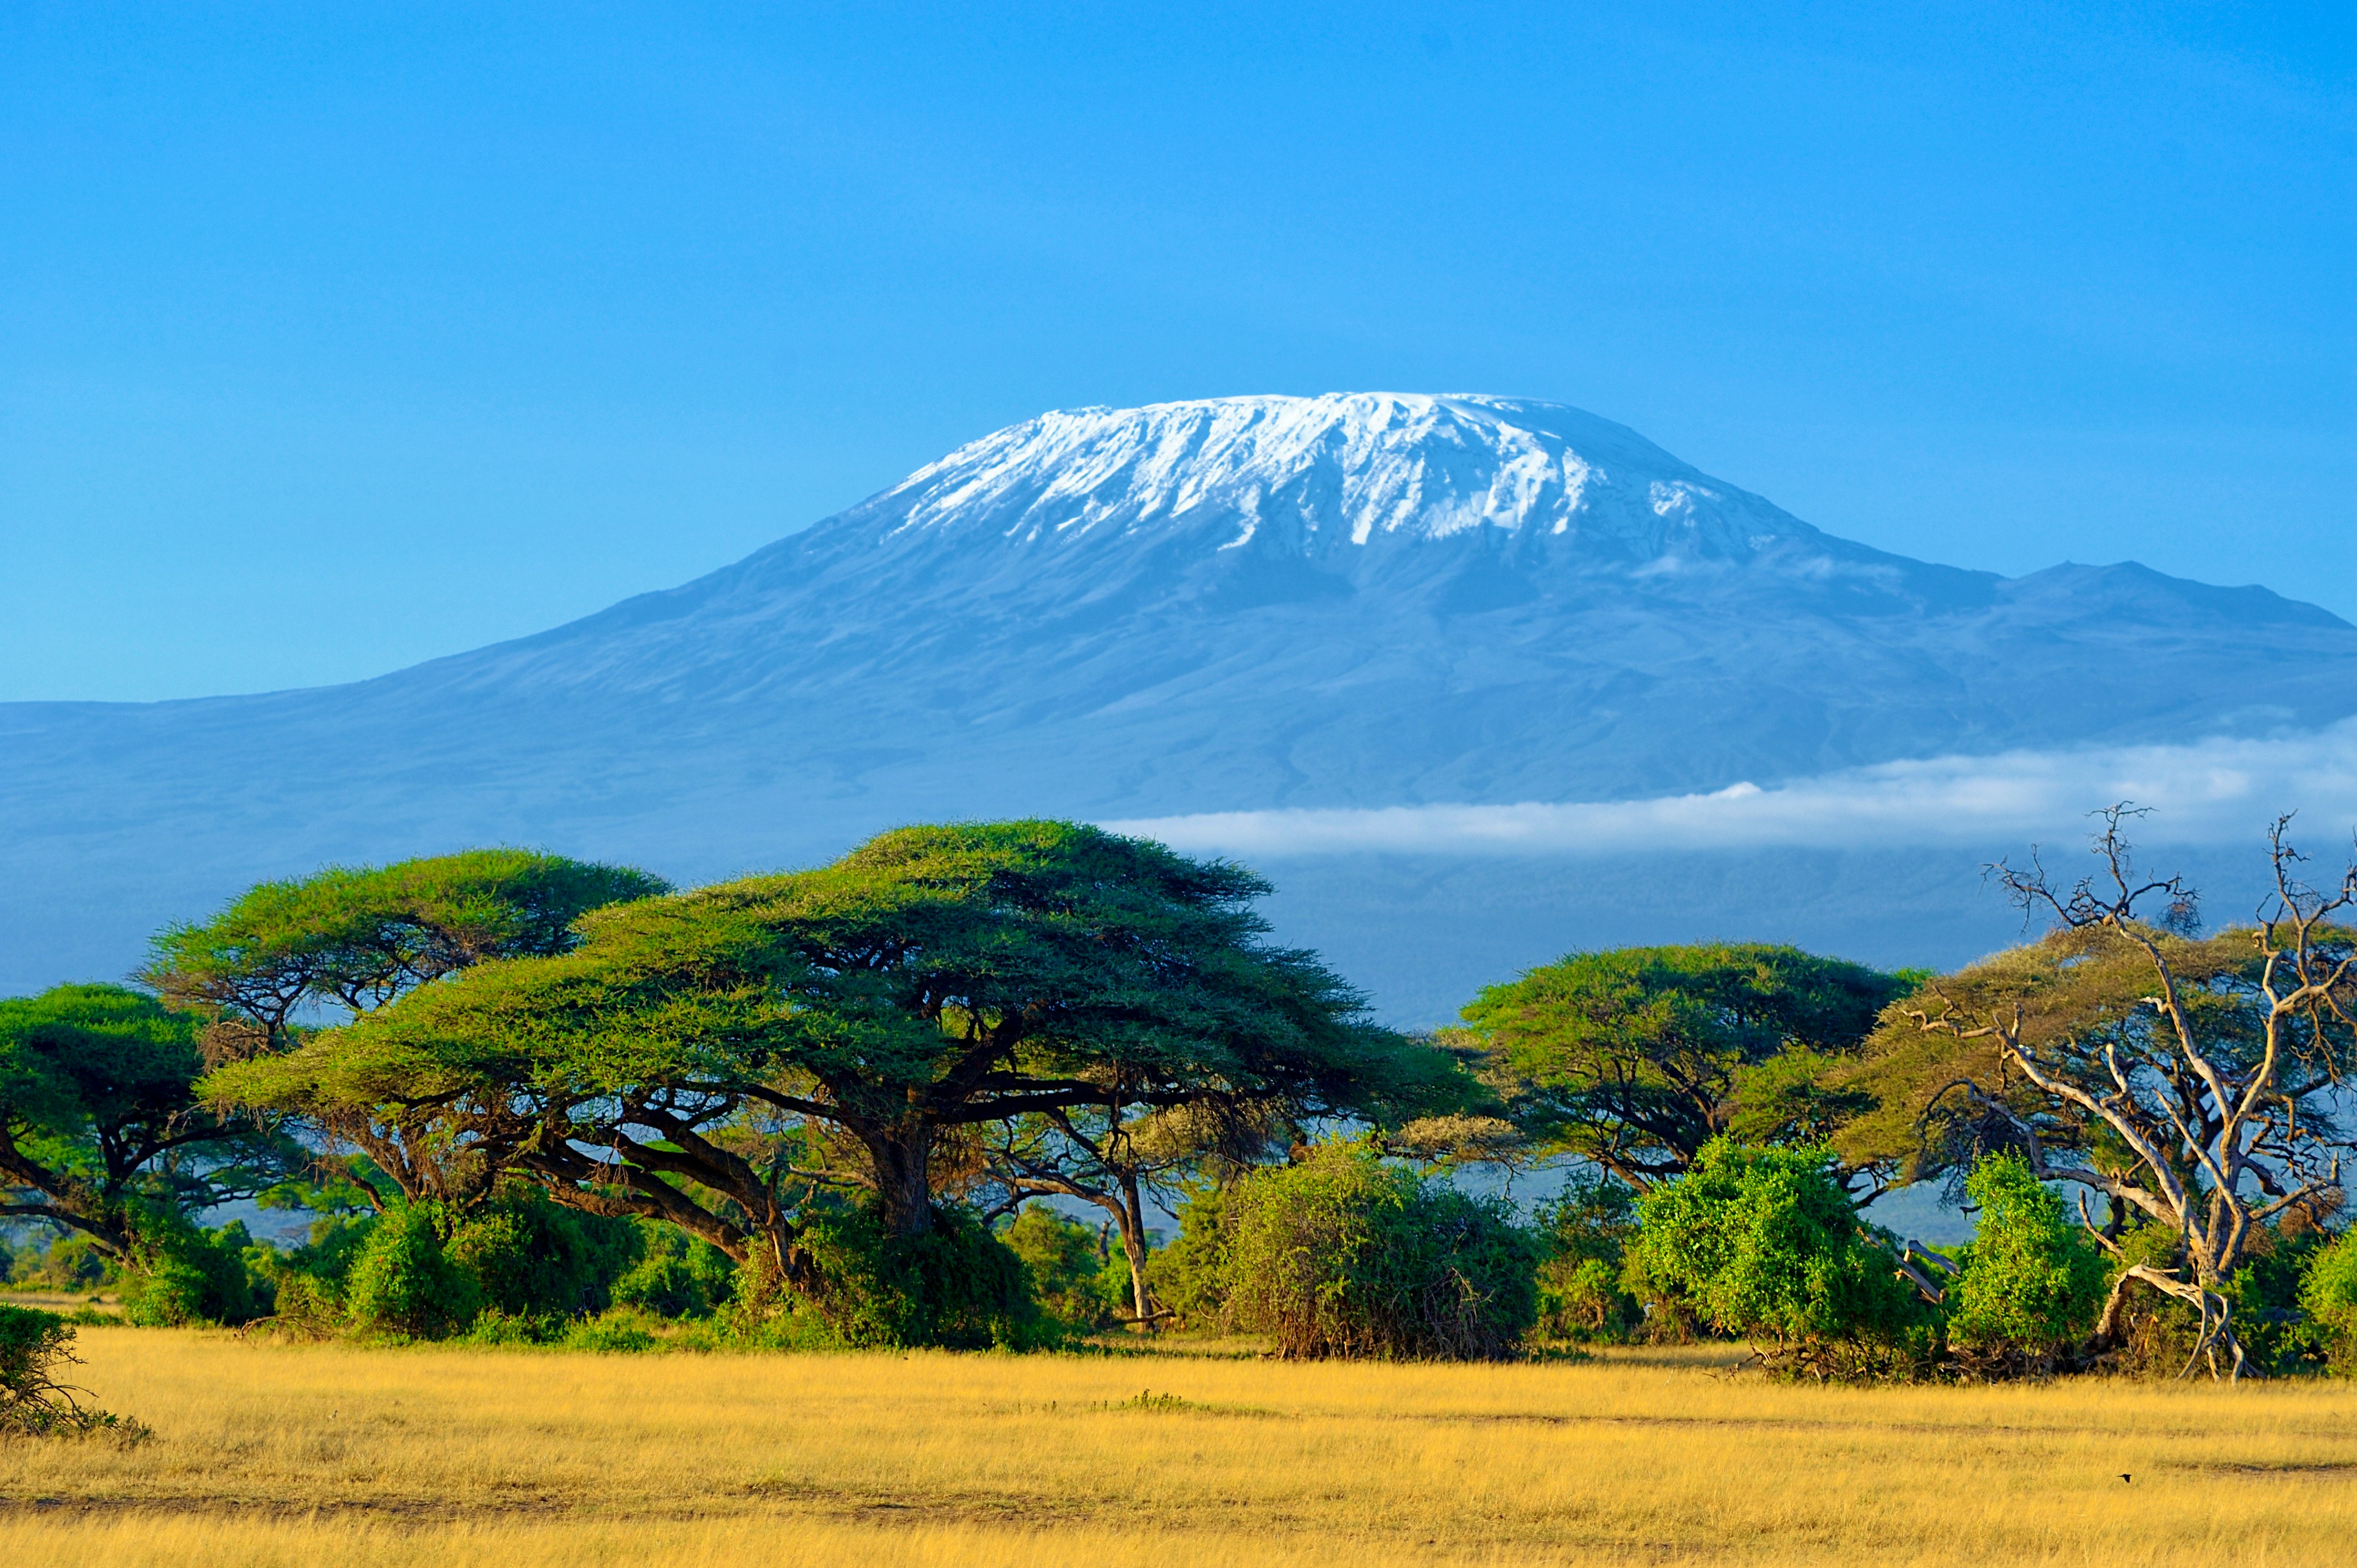 Snow on top of Mount Kilimanjaro in Amboseli – © byrdyak - Fotolia